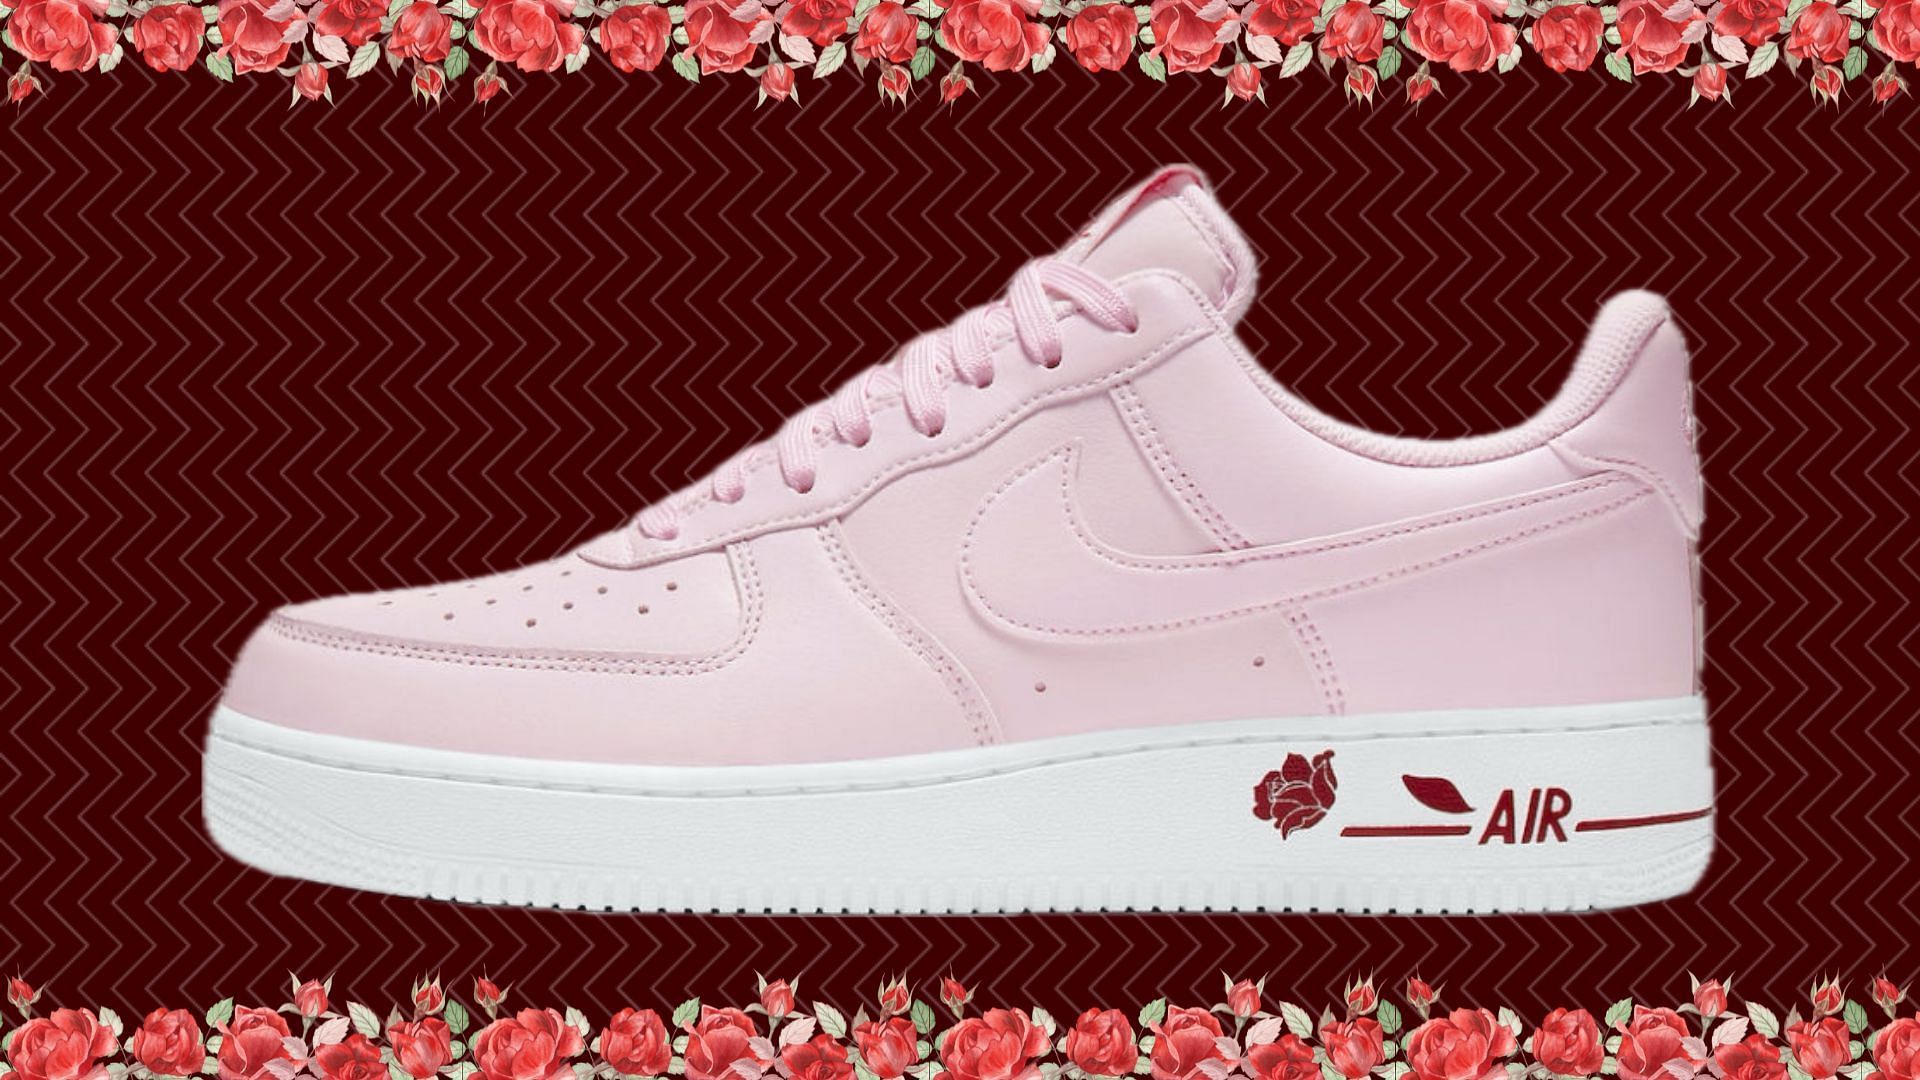 Nike Air Force 1 Low Rose Pink sneakers (Image via Nike)